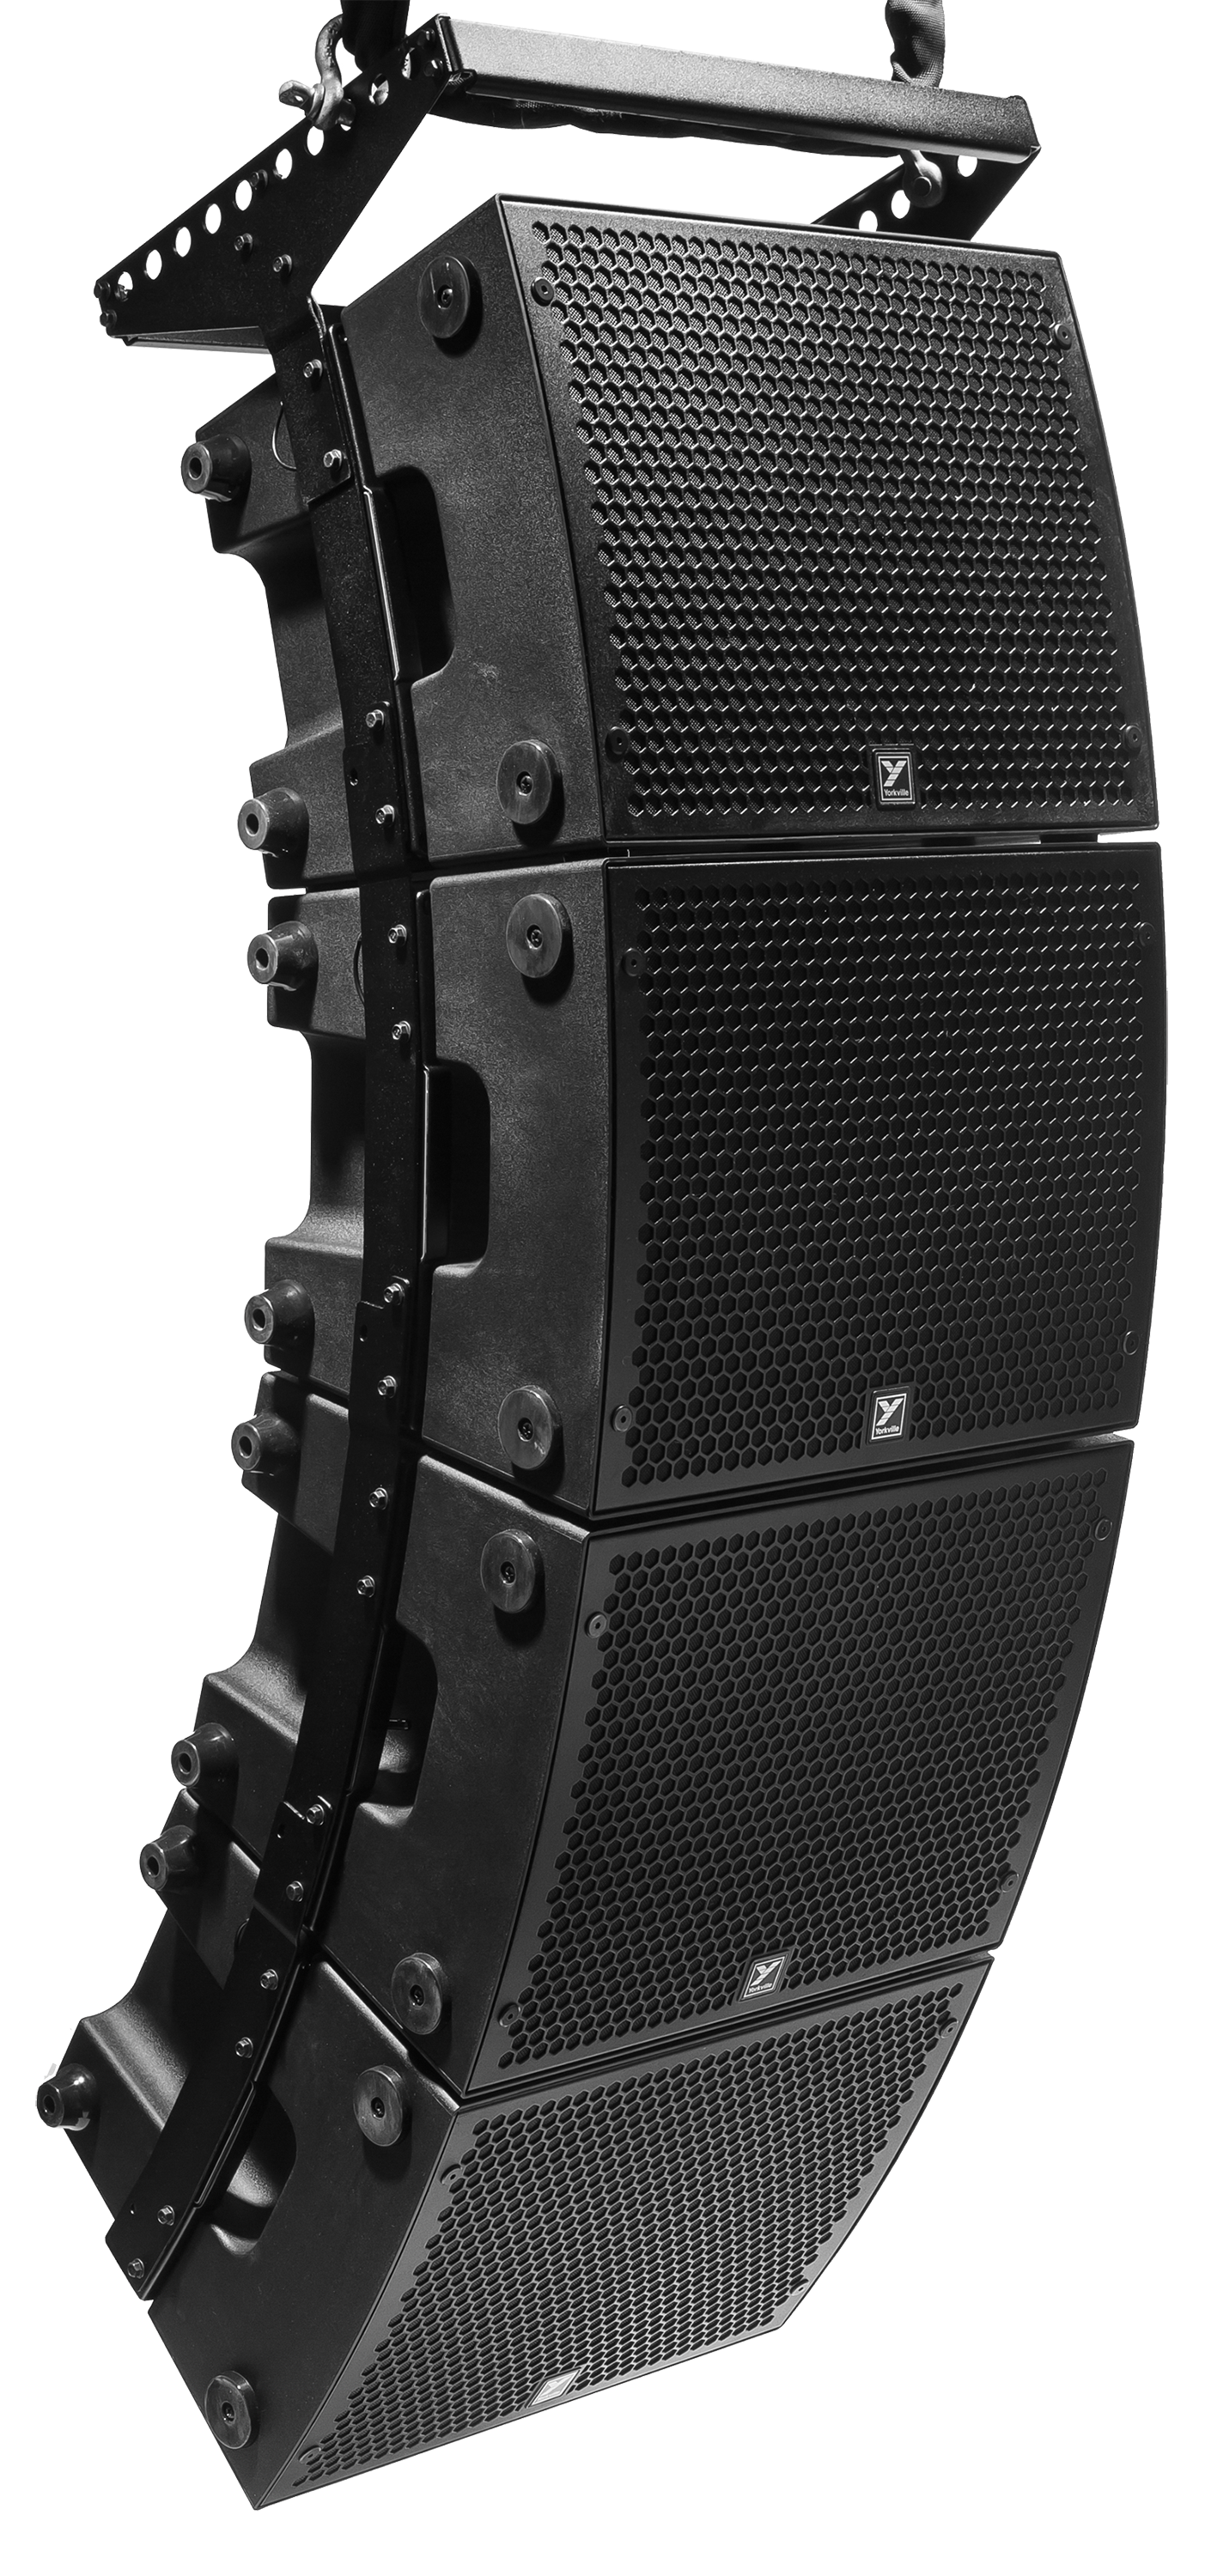 Paraline speaker image